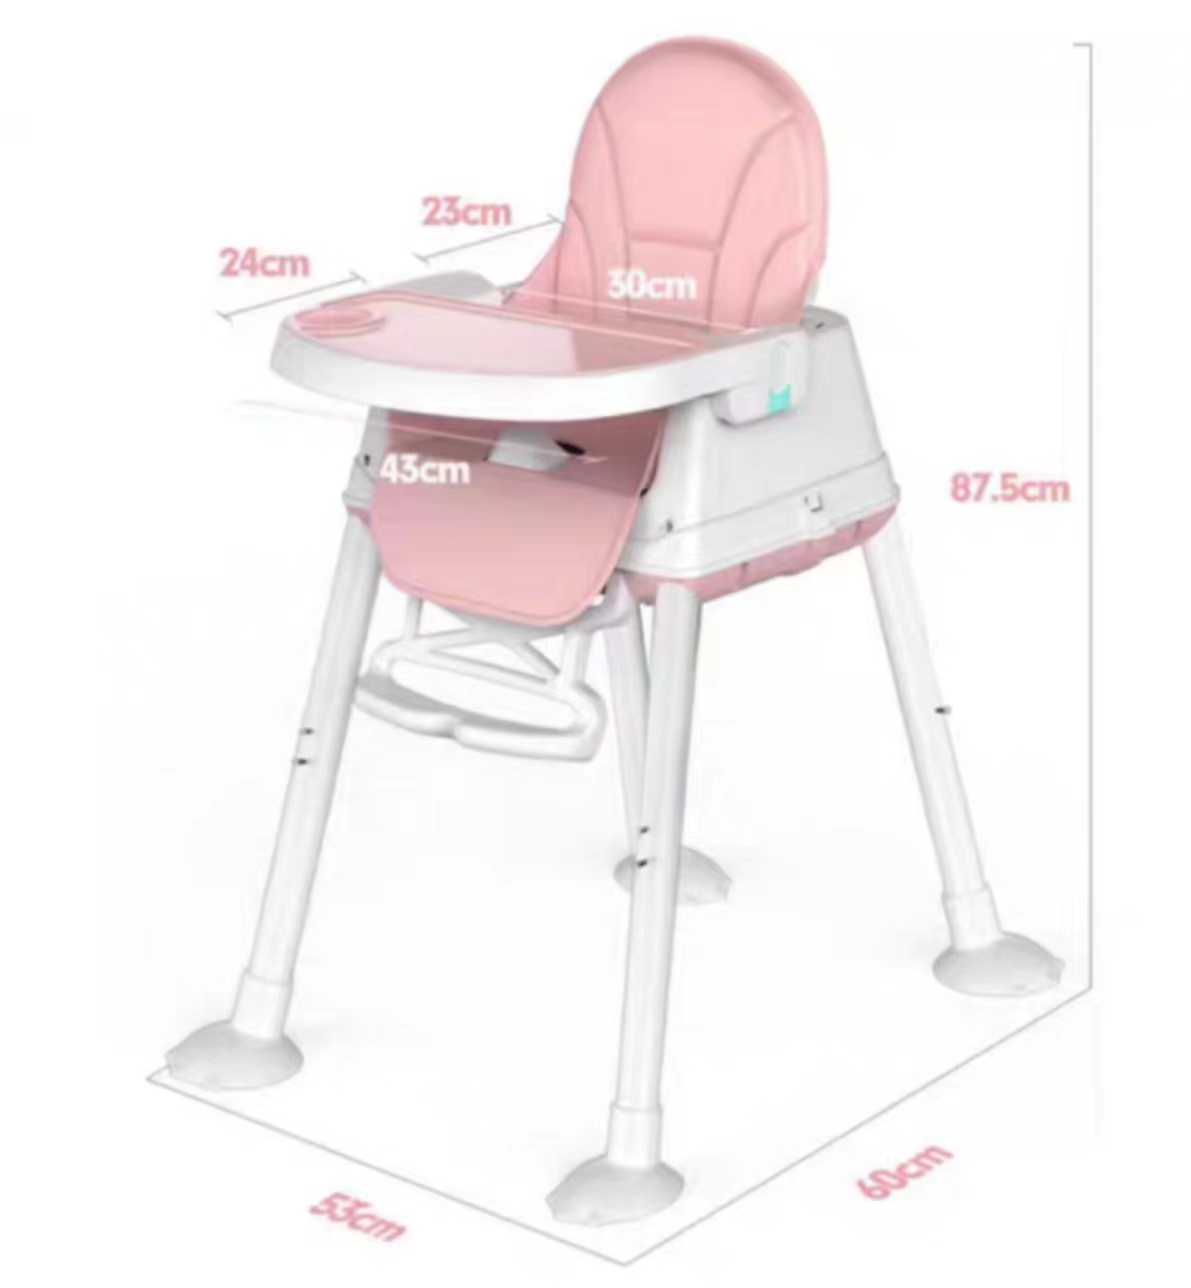 baby chiar多功能舒适宝宝可调节可折叠餐椅简约溜溜椅母婴用品童车童床详情图5